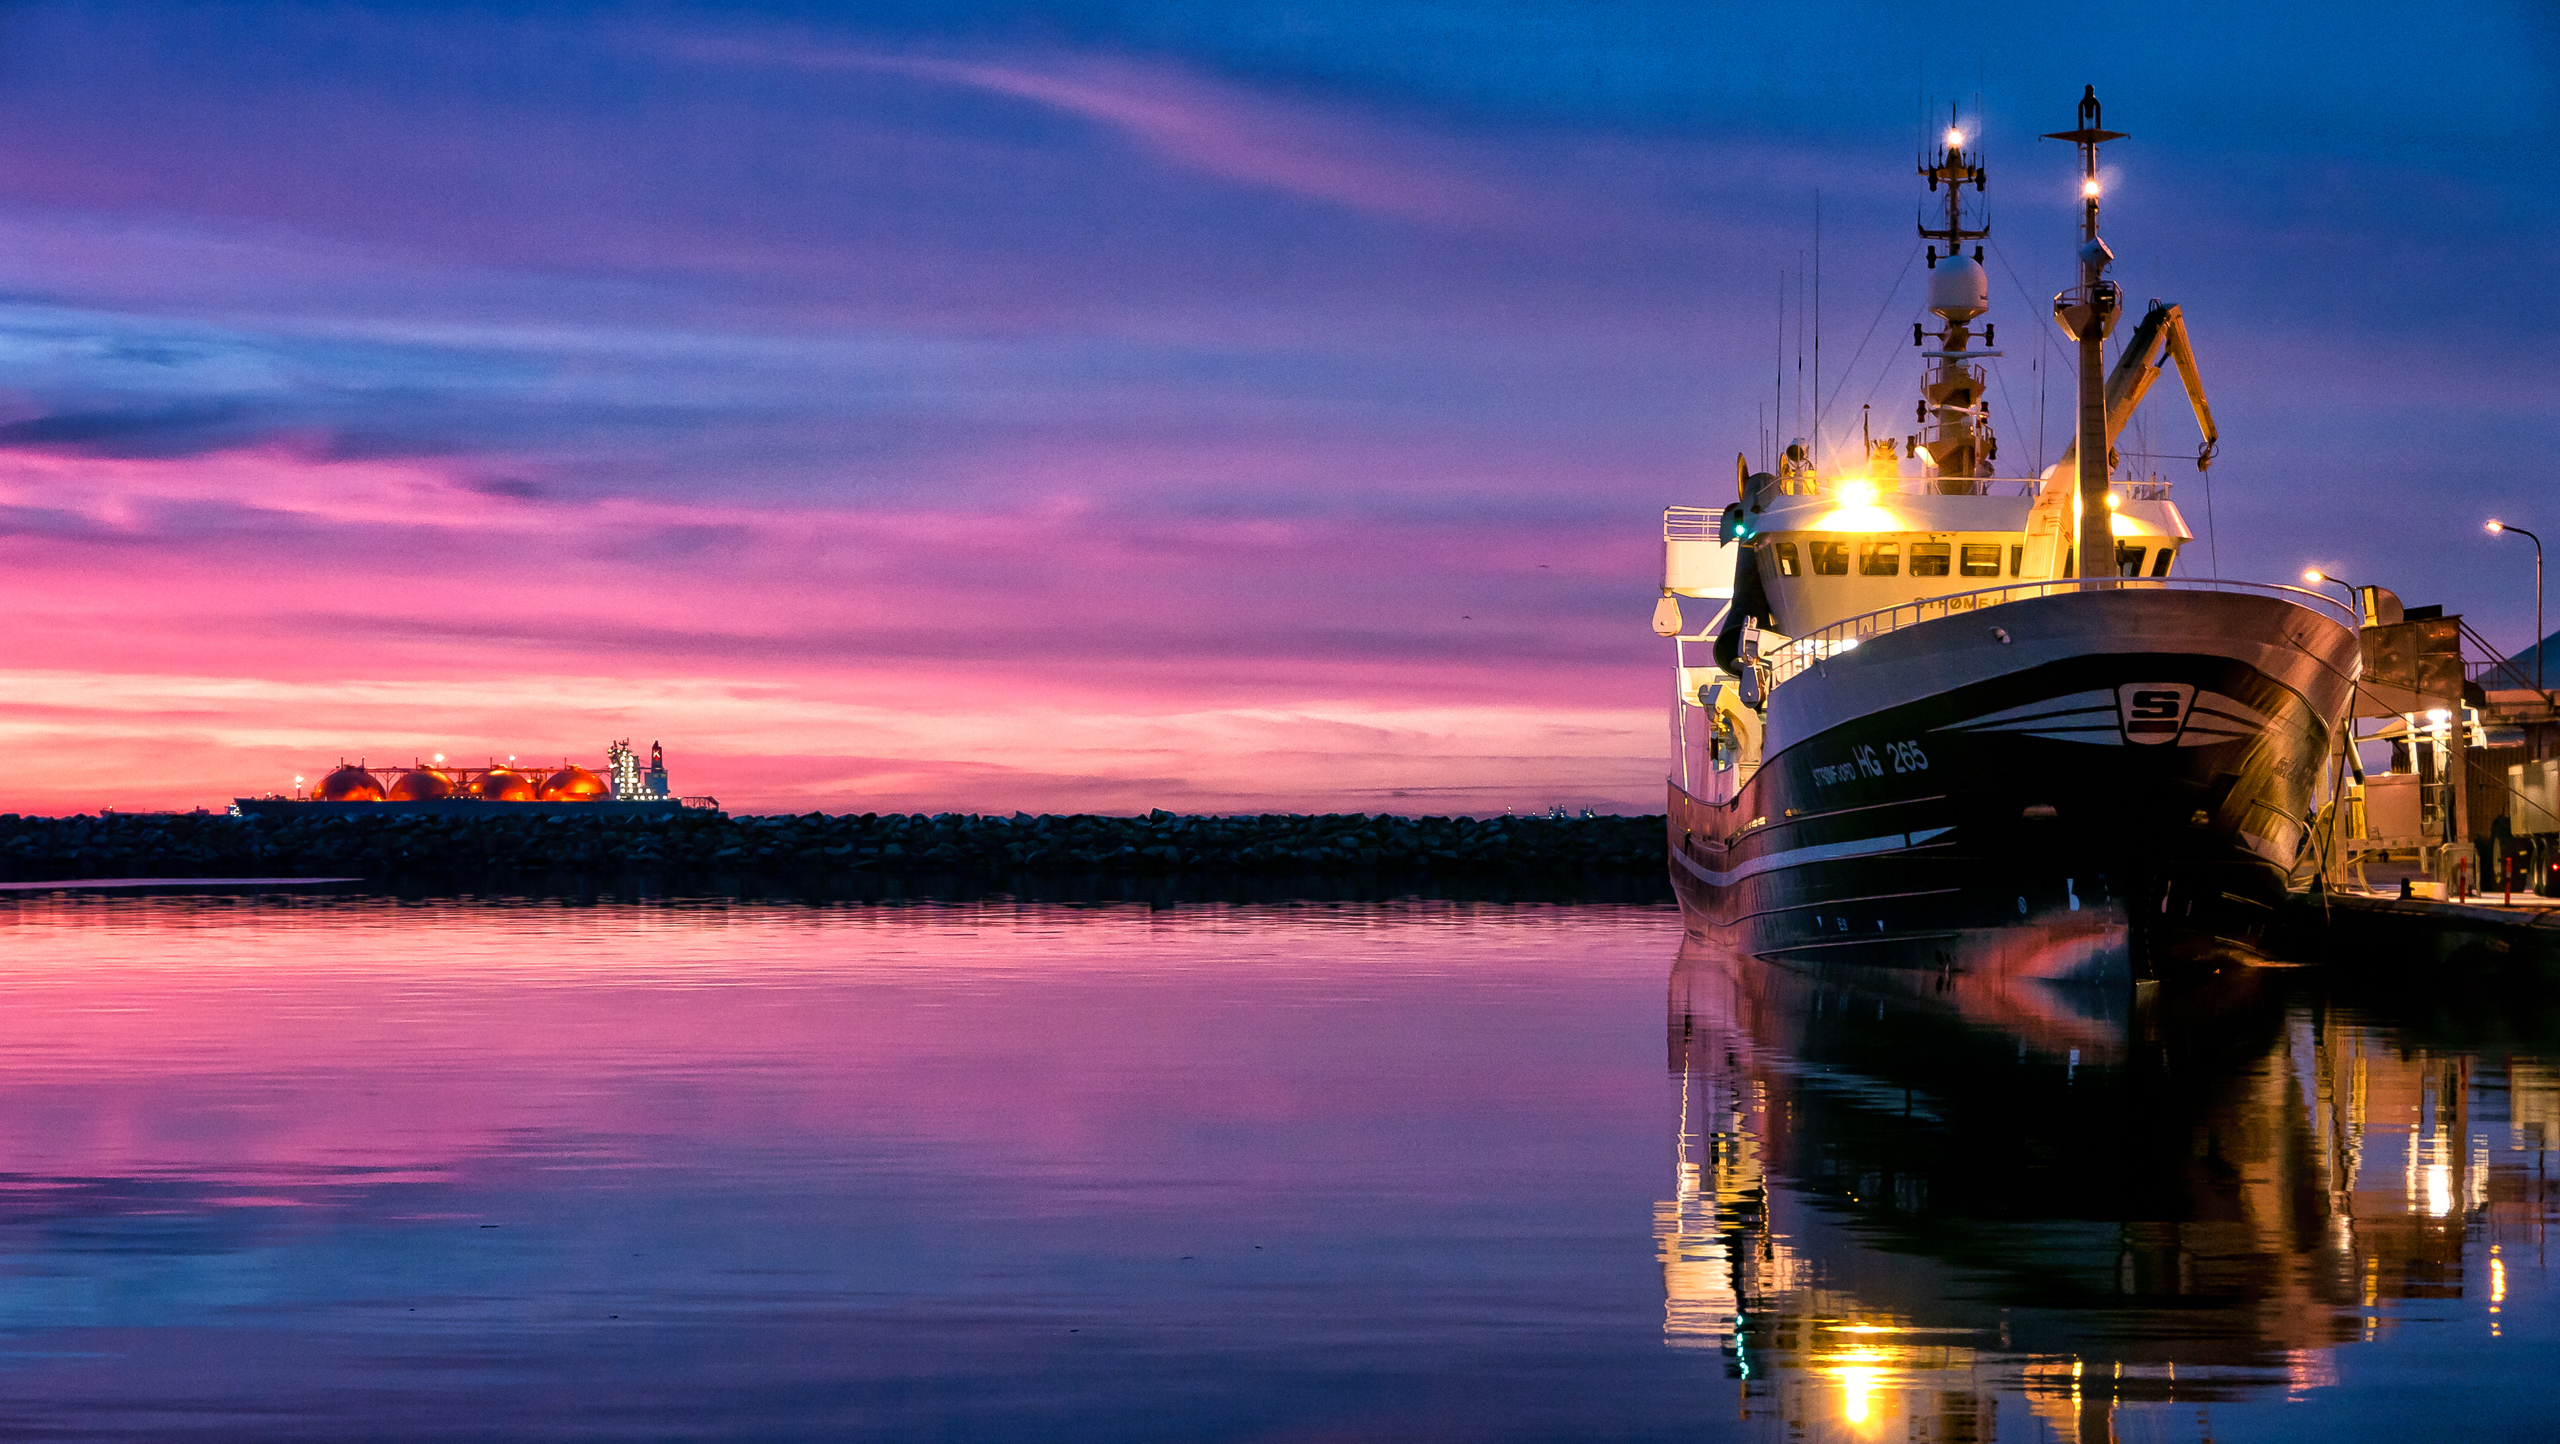 ship wallpaper hd,sky,vehicle,reflection,boat,sunset